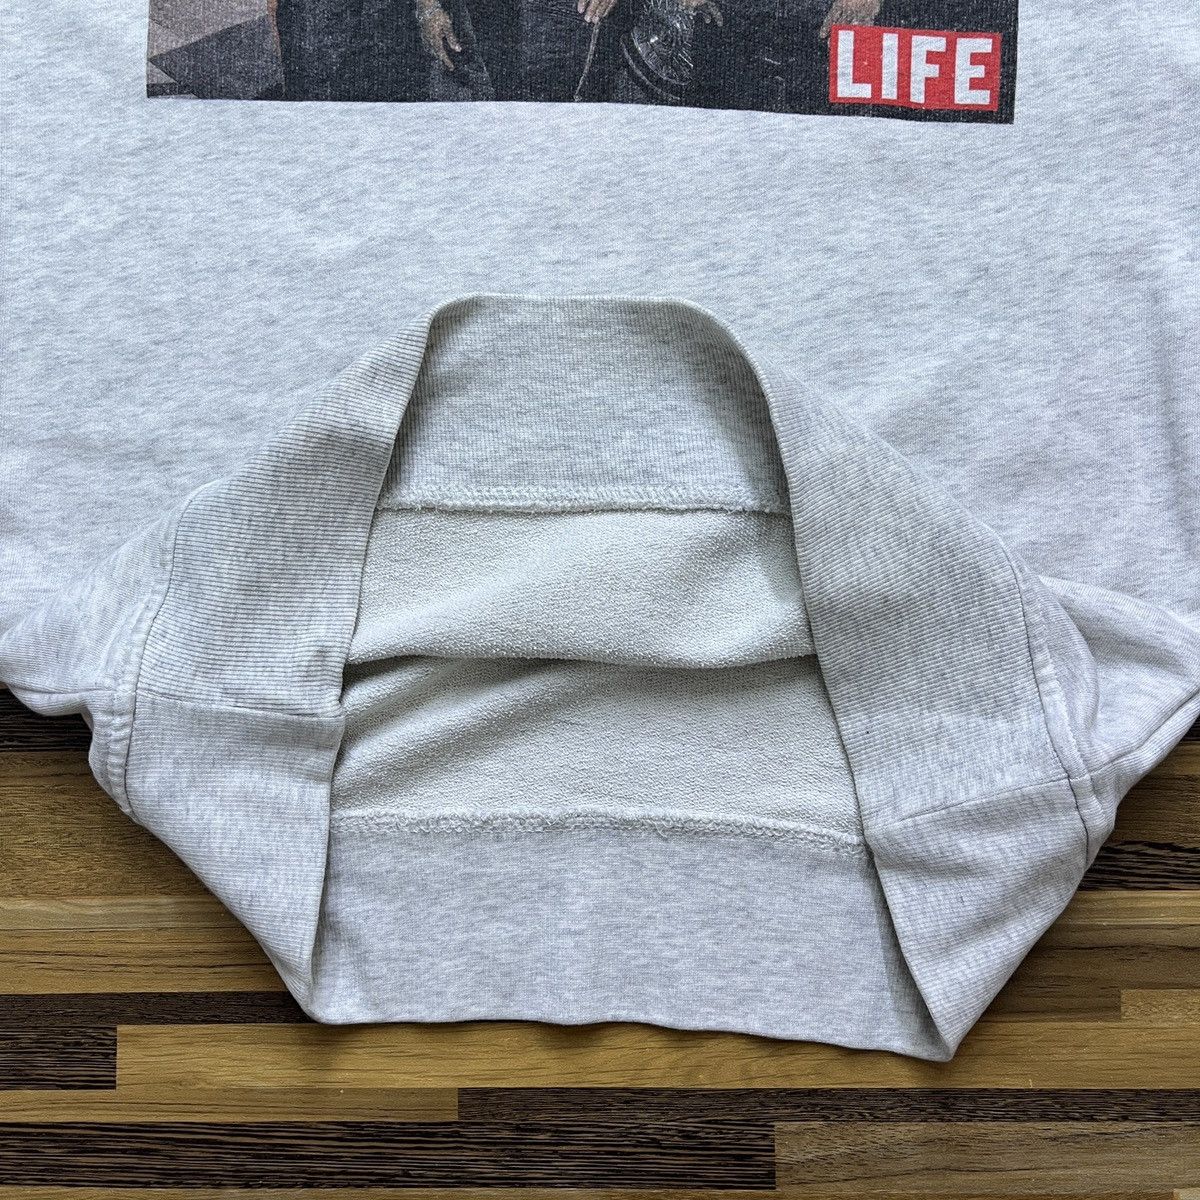 Band Tees - Rare Design RUN DMC Sweatshirts Life - 10